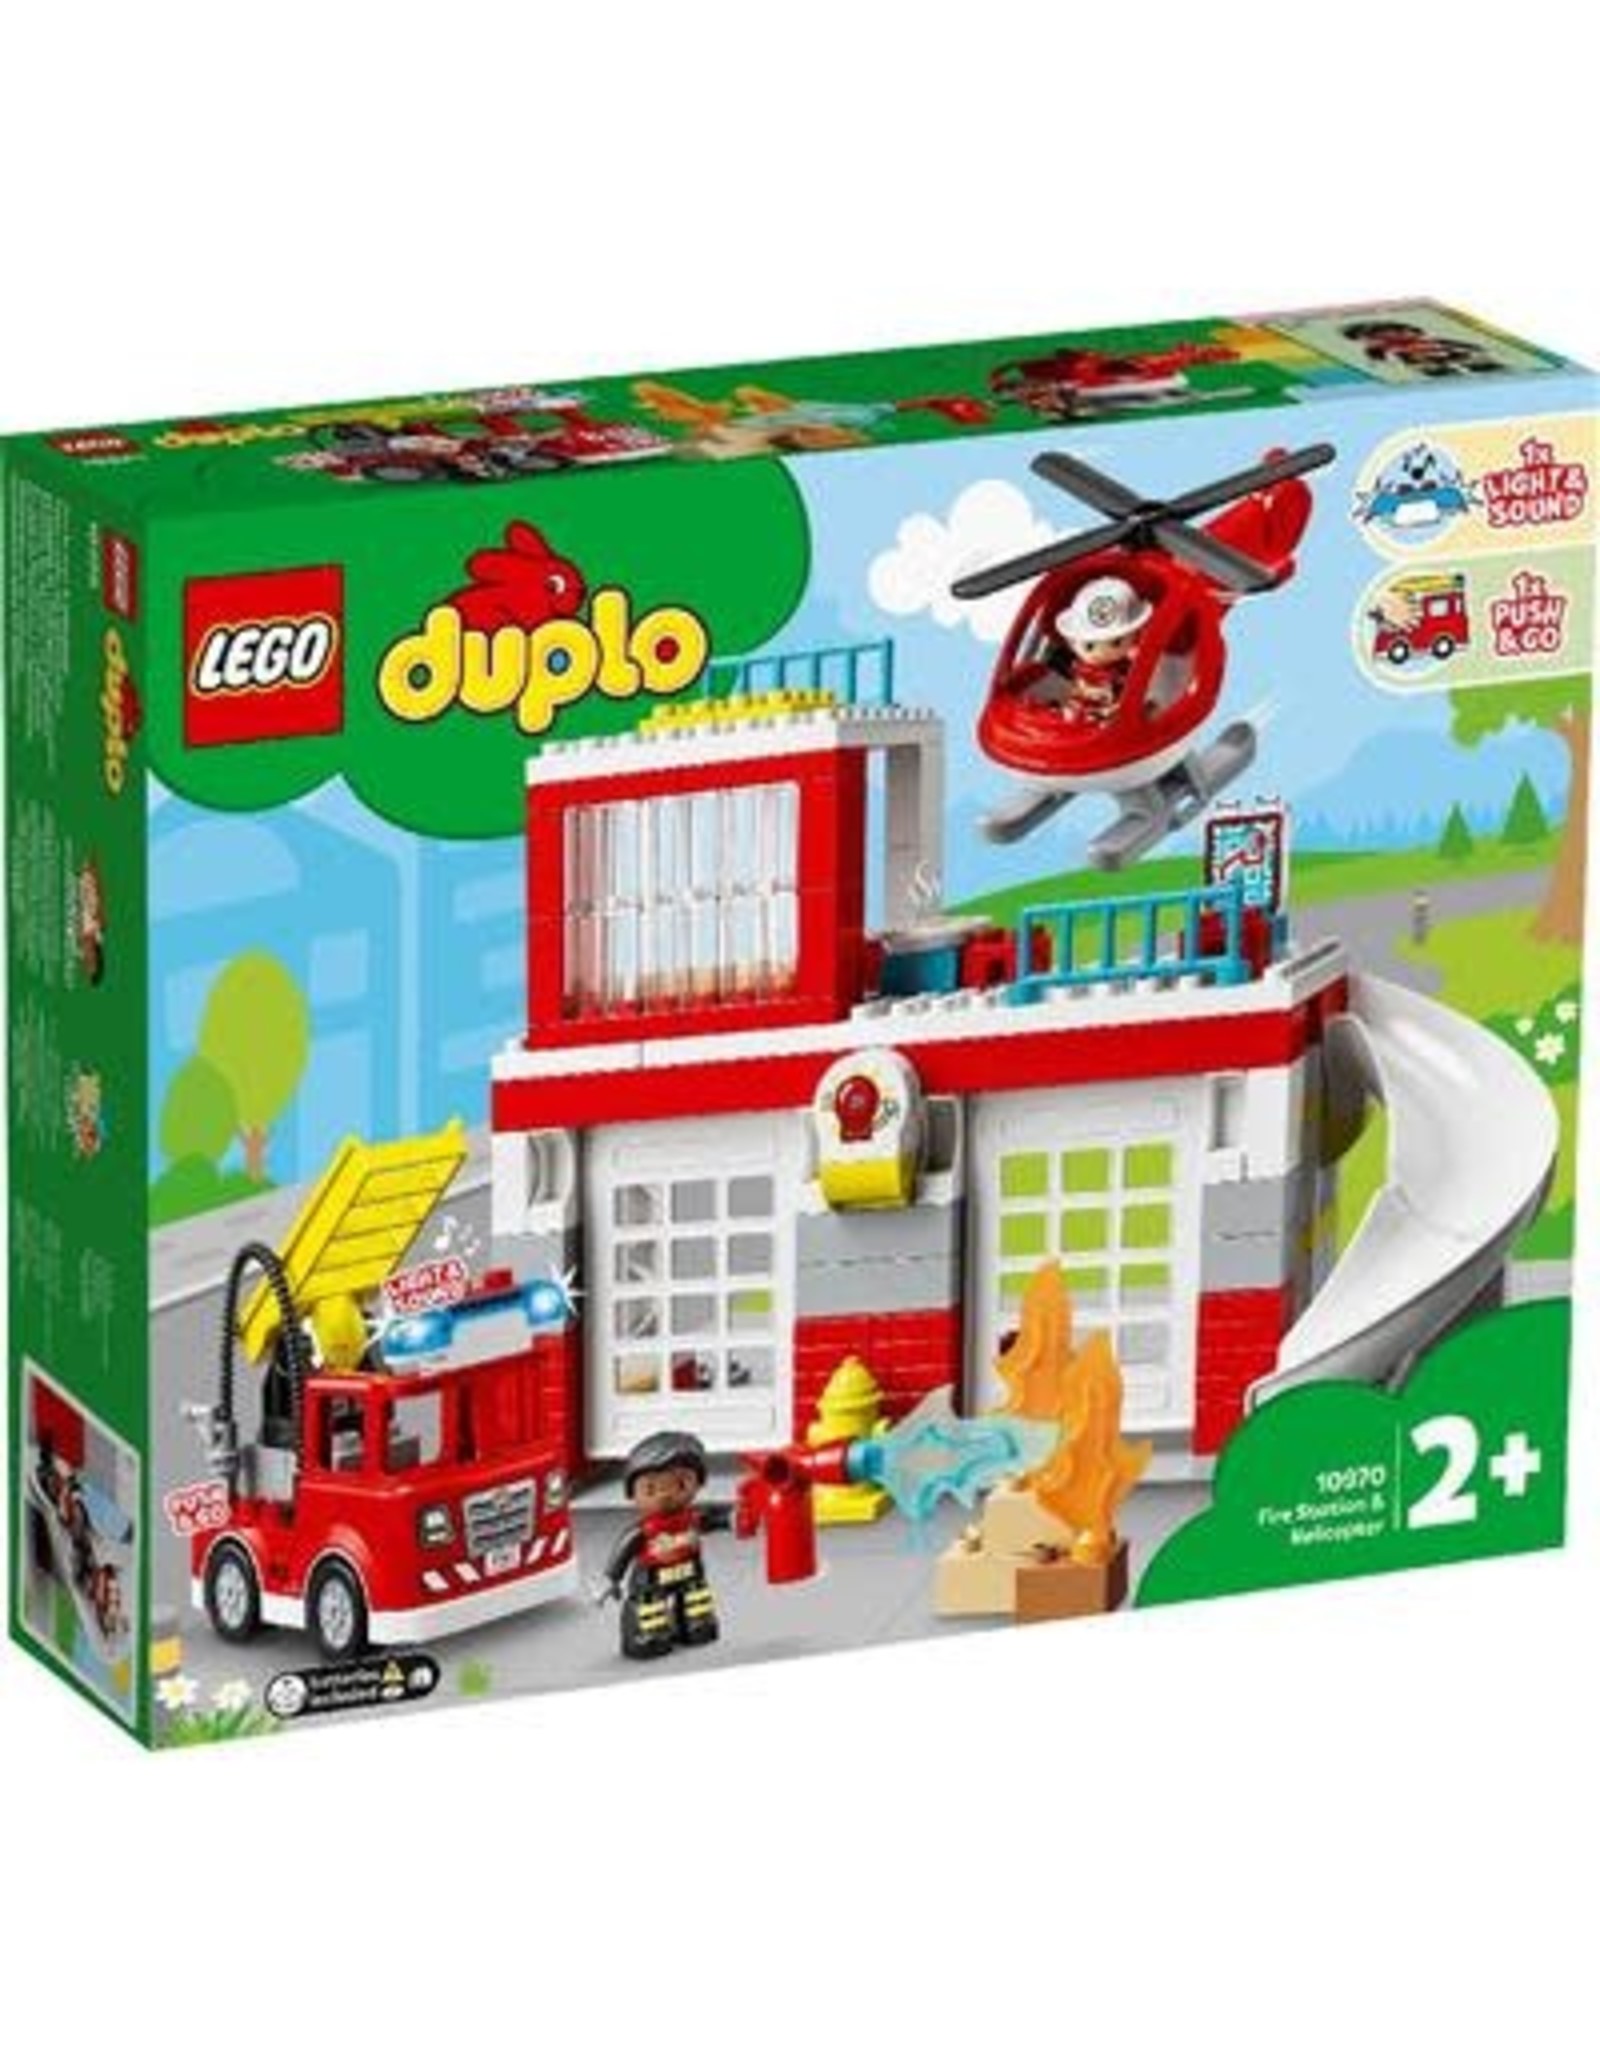 LEGO Lego Duplo 10970 Brandweerkazerne met Helicopter